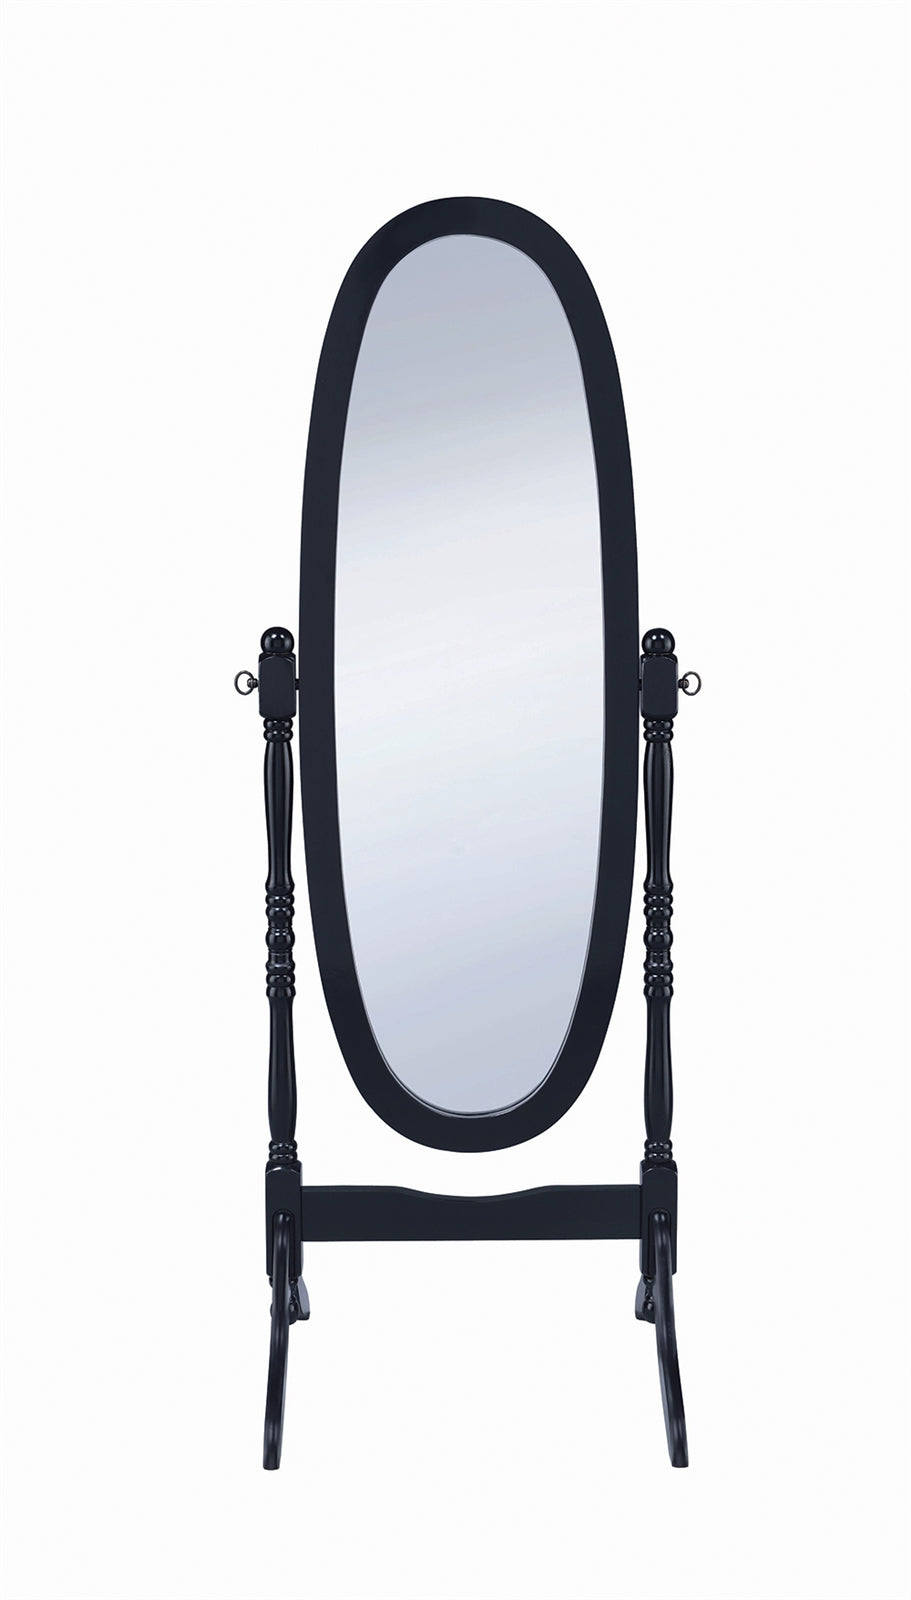 Oval Black Cheval Mirror